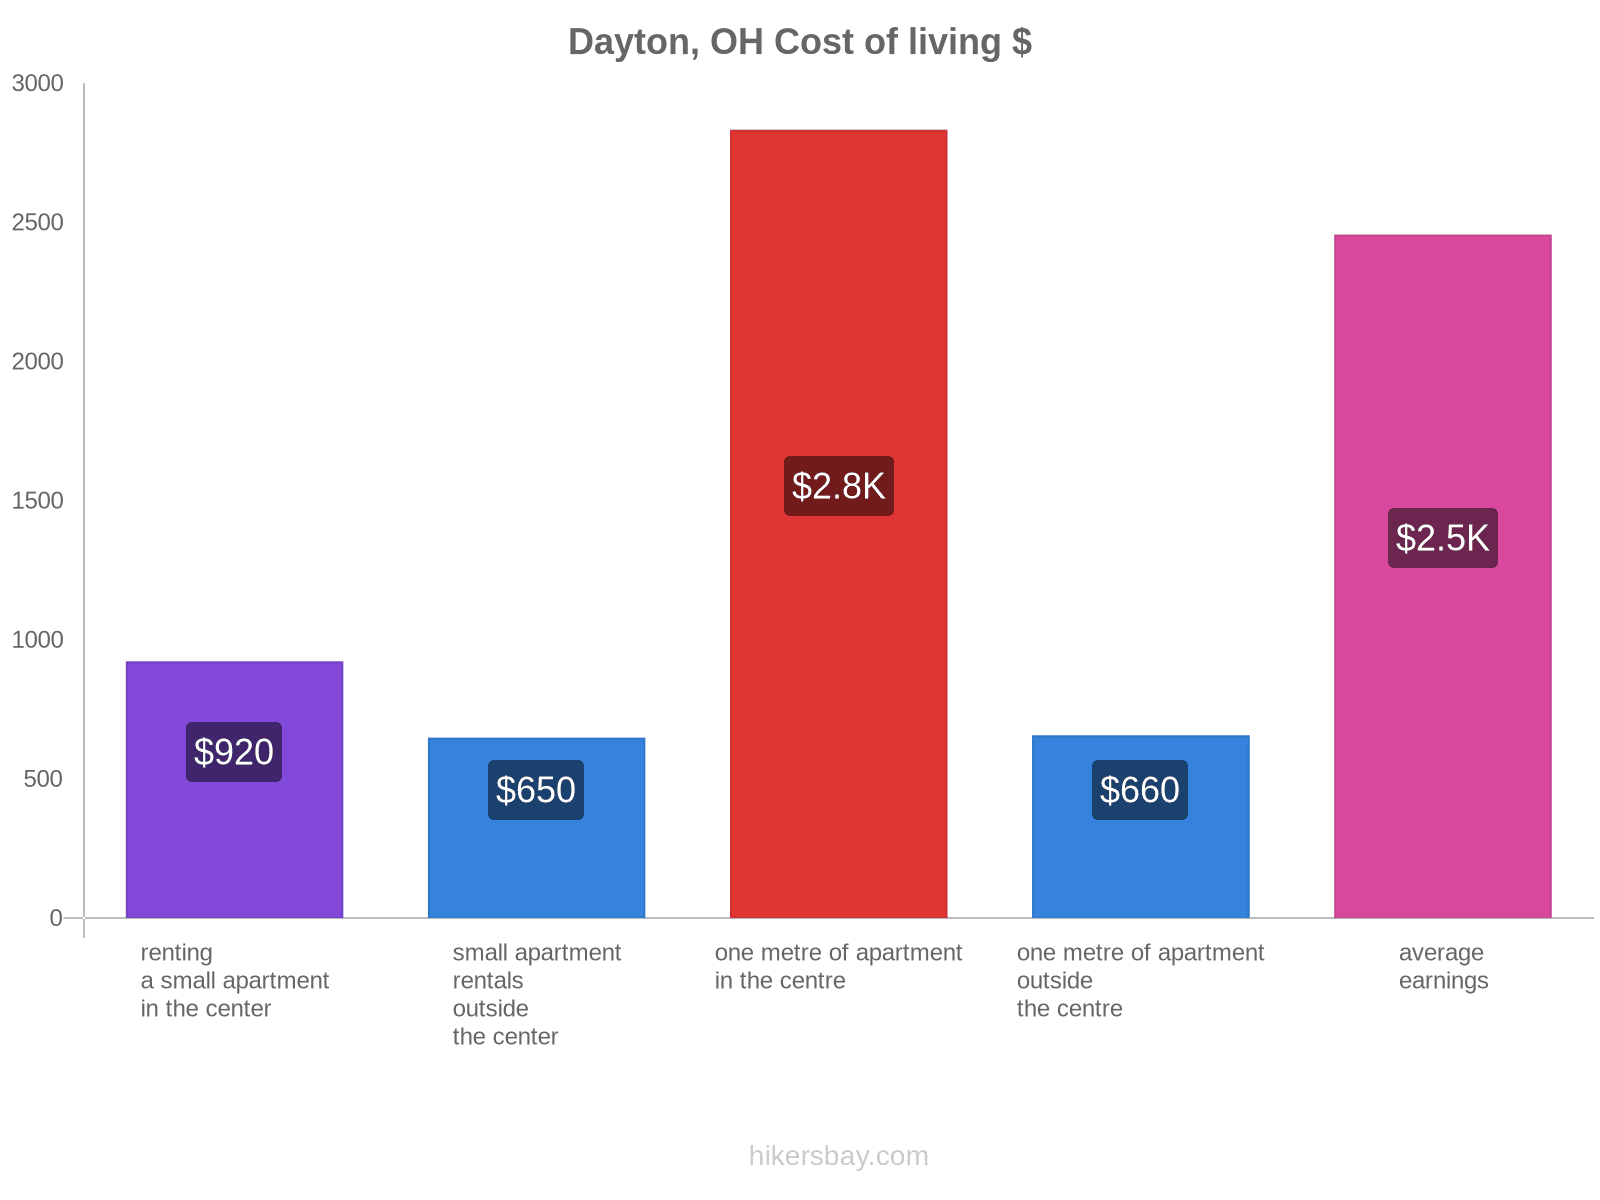 Dayton, OH cost of living hikersbay.com